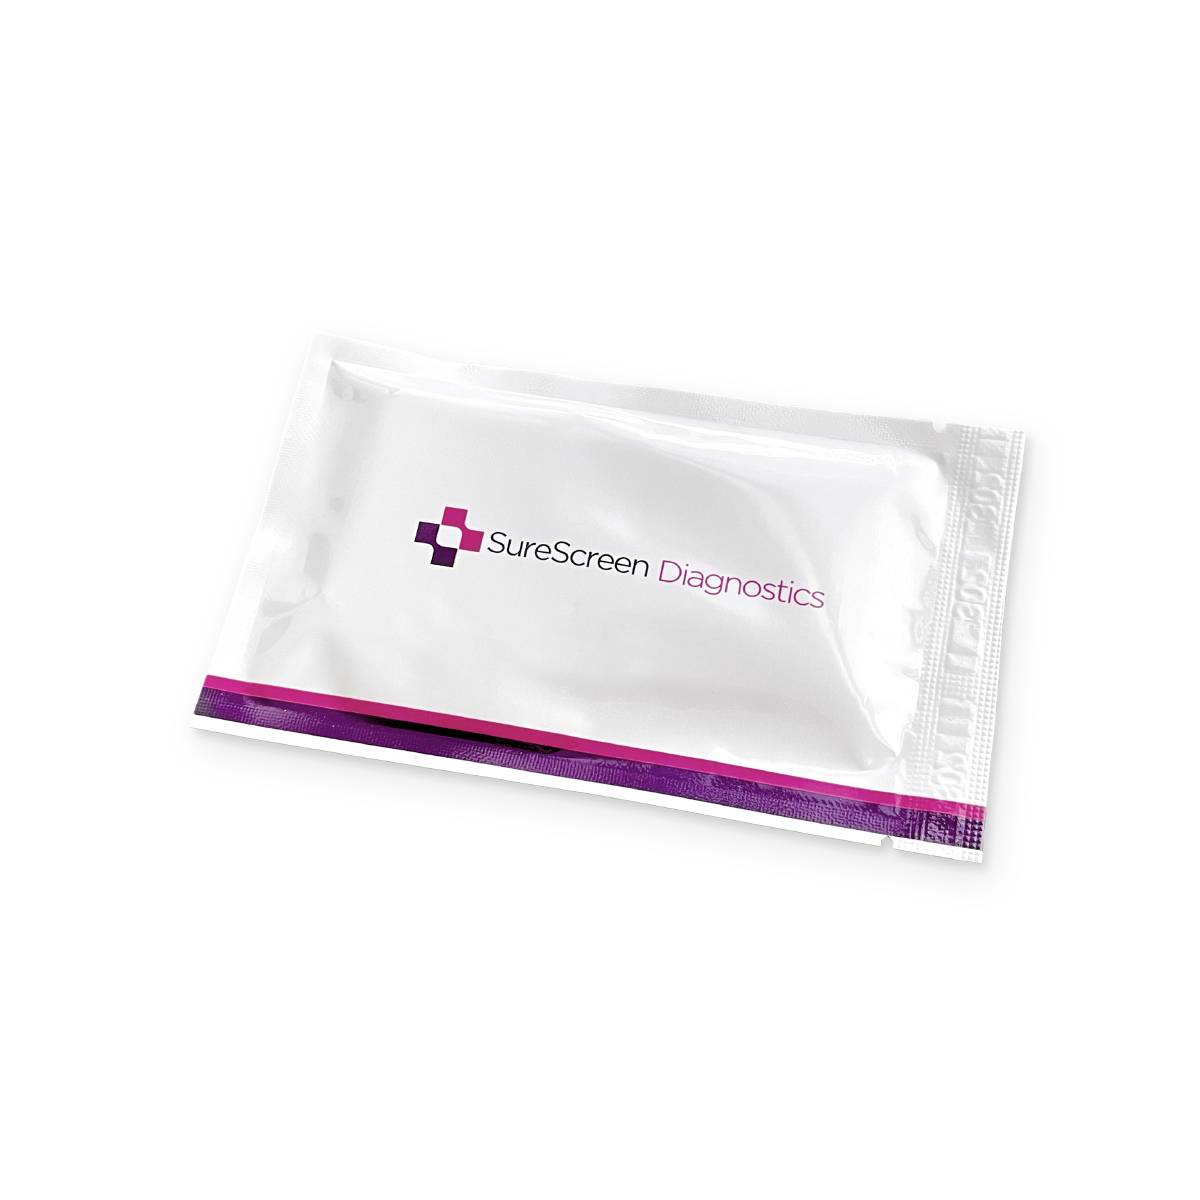 Surescreen multi-panel drug test kit (Temp out of stock)